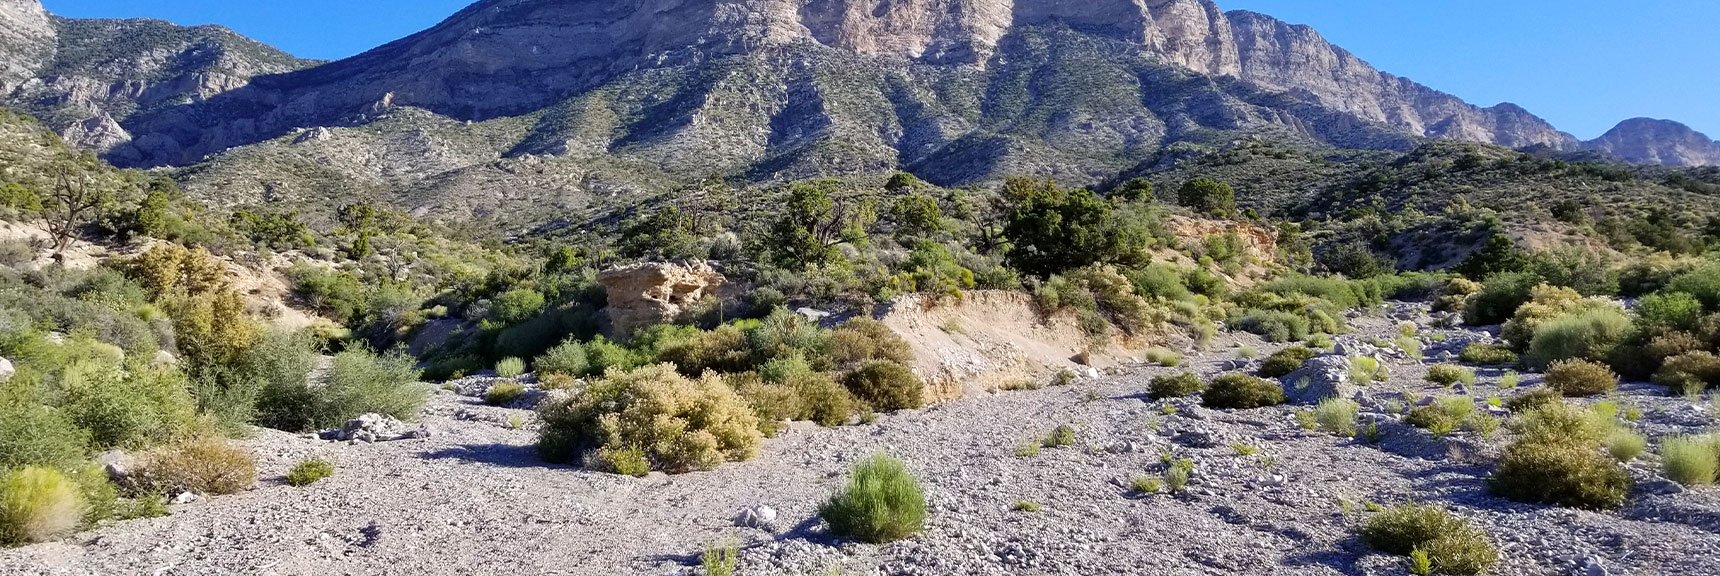 Upper Red Rock Canyon Wash Divide Toward Calico Basin and Damsel Peak